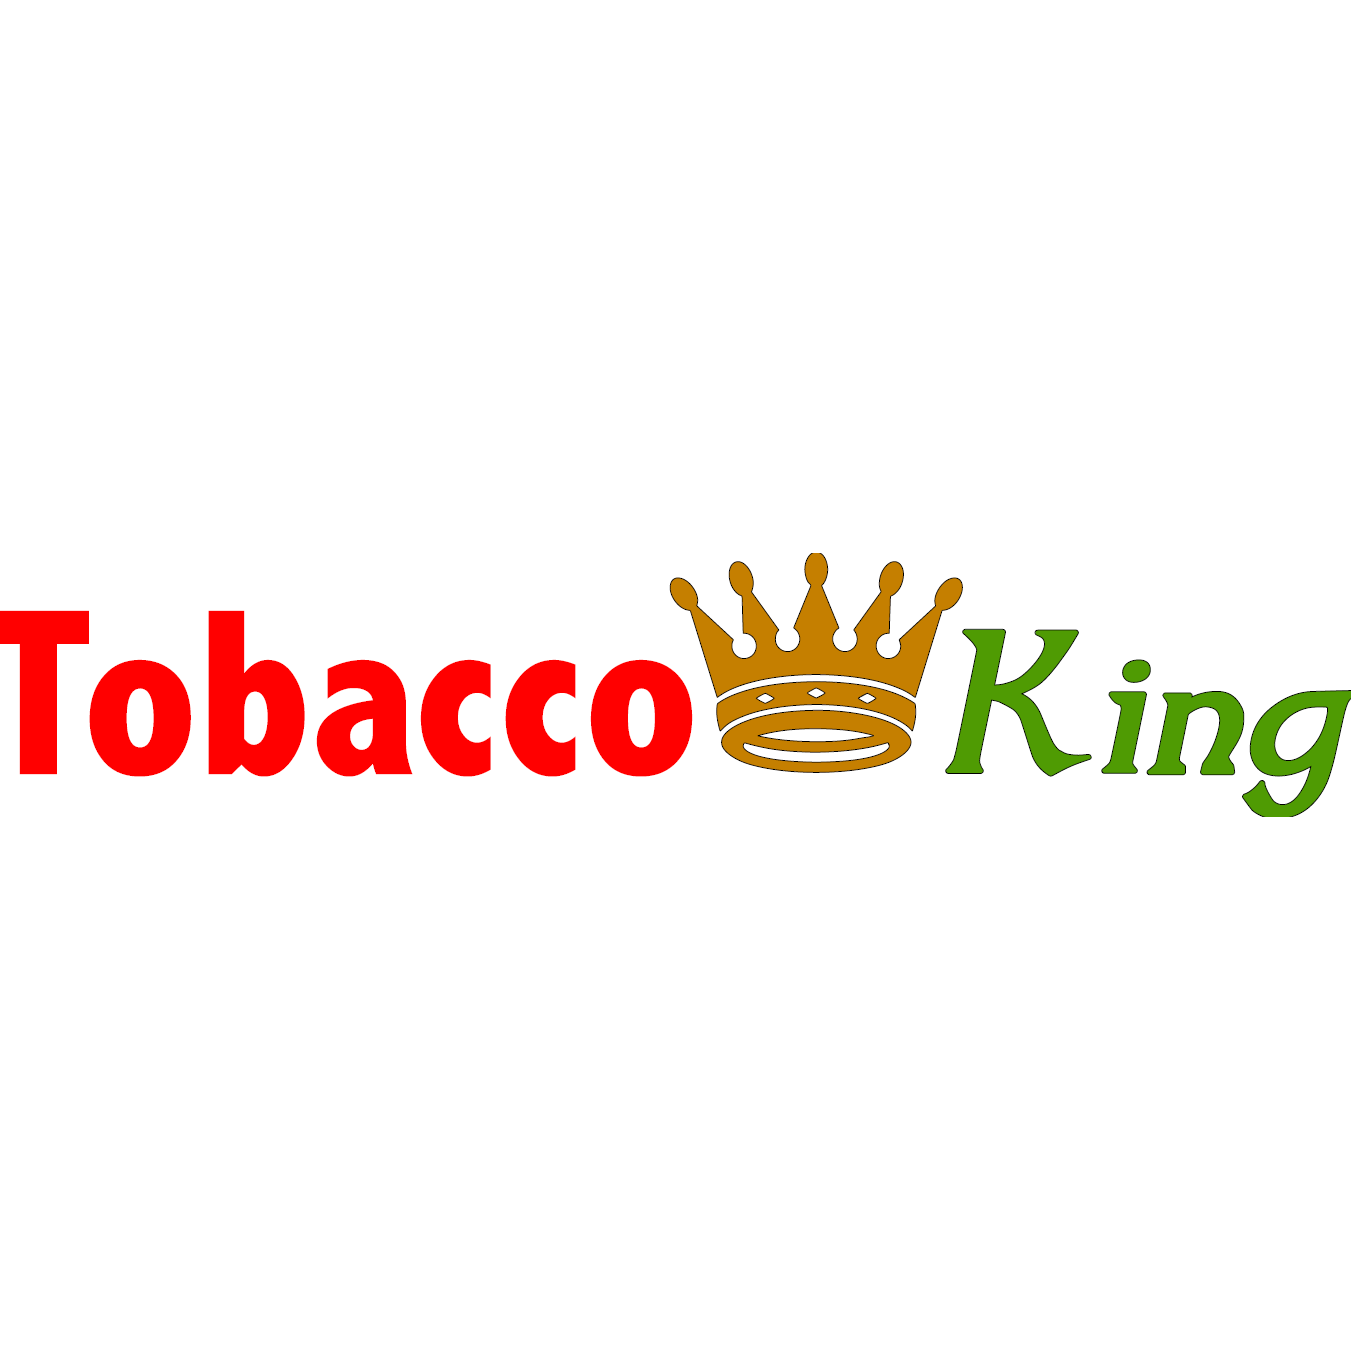 TOBACCO KING OF VAPE CBD KRATOM AND HOOKAH Logo